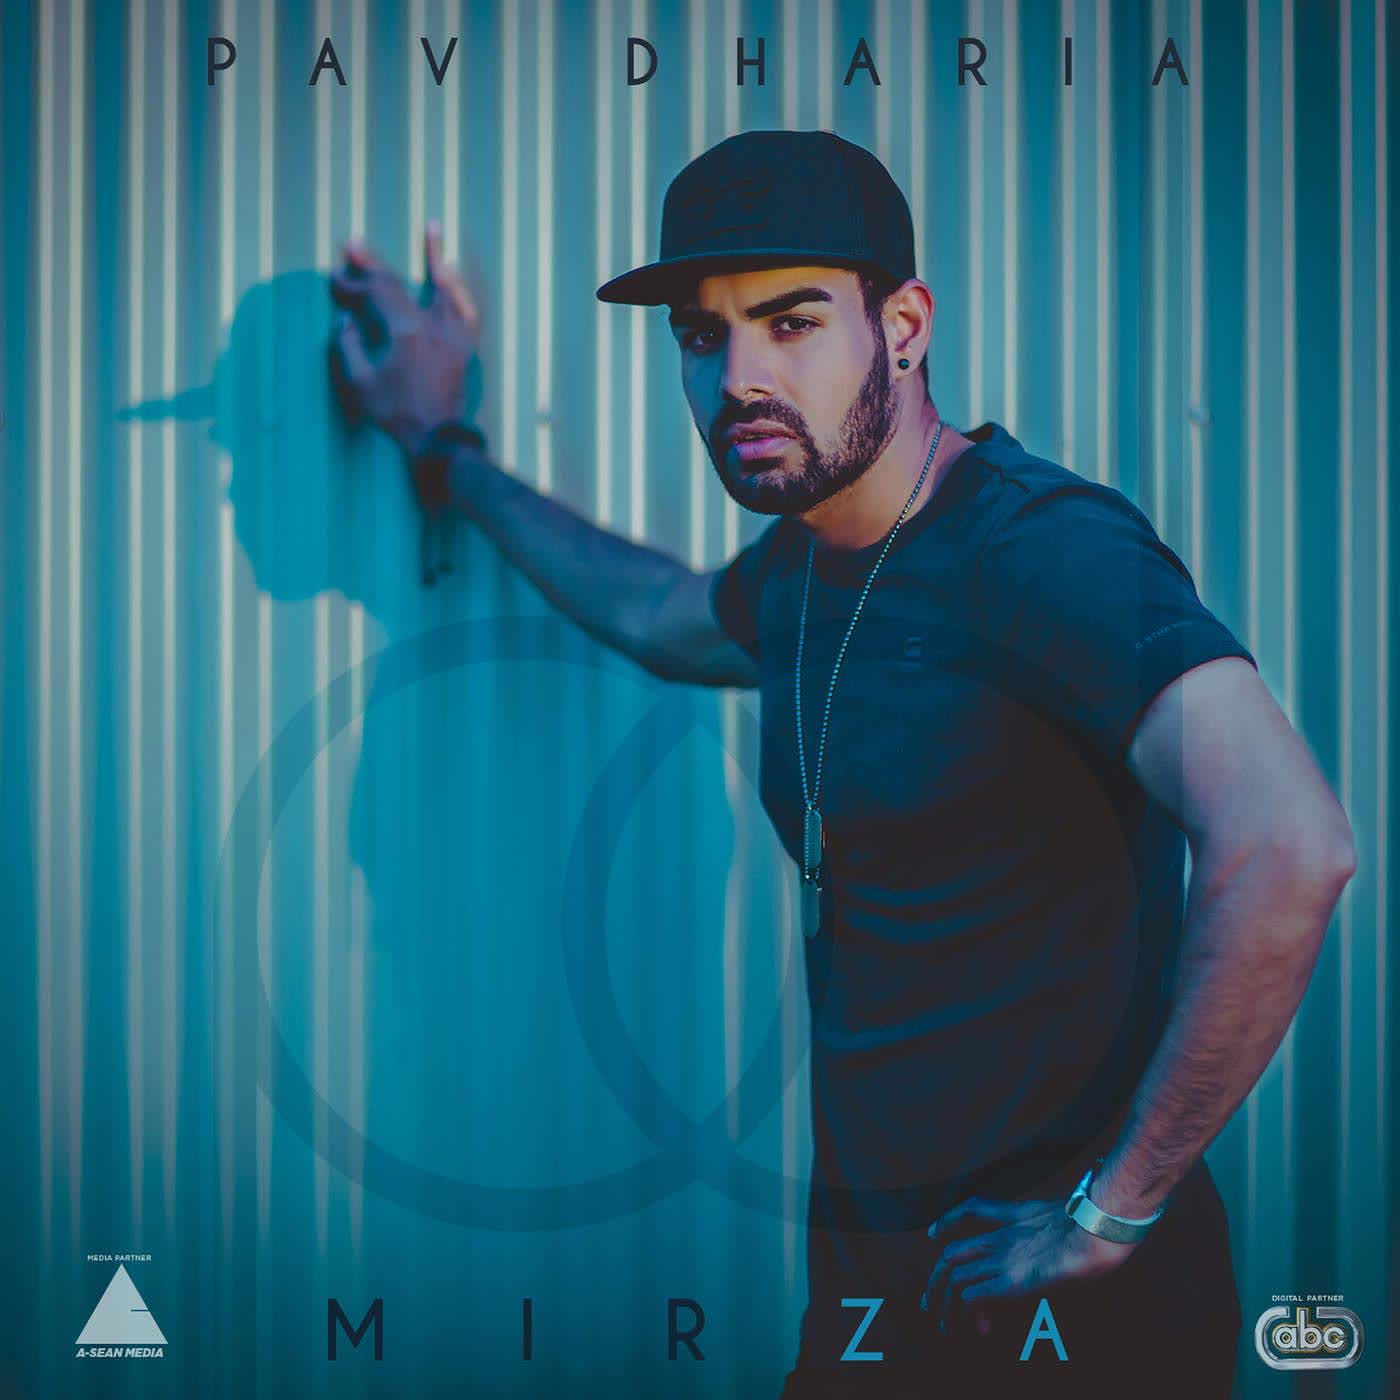 Mirza Pav Dharia  Mp3 song download